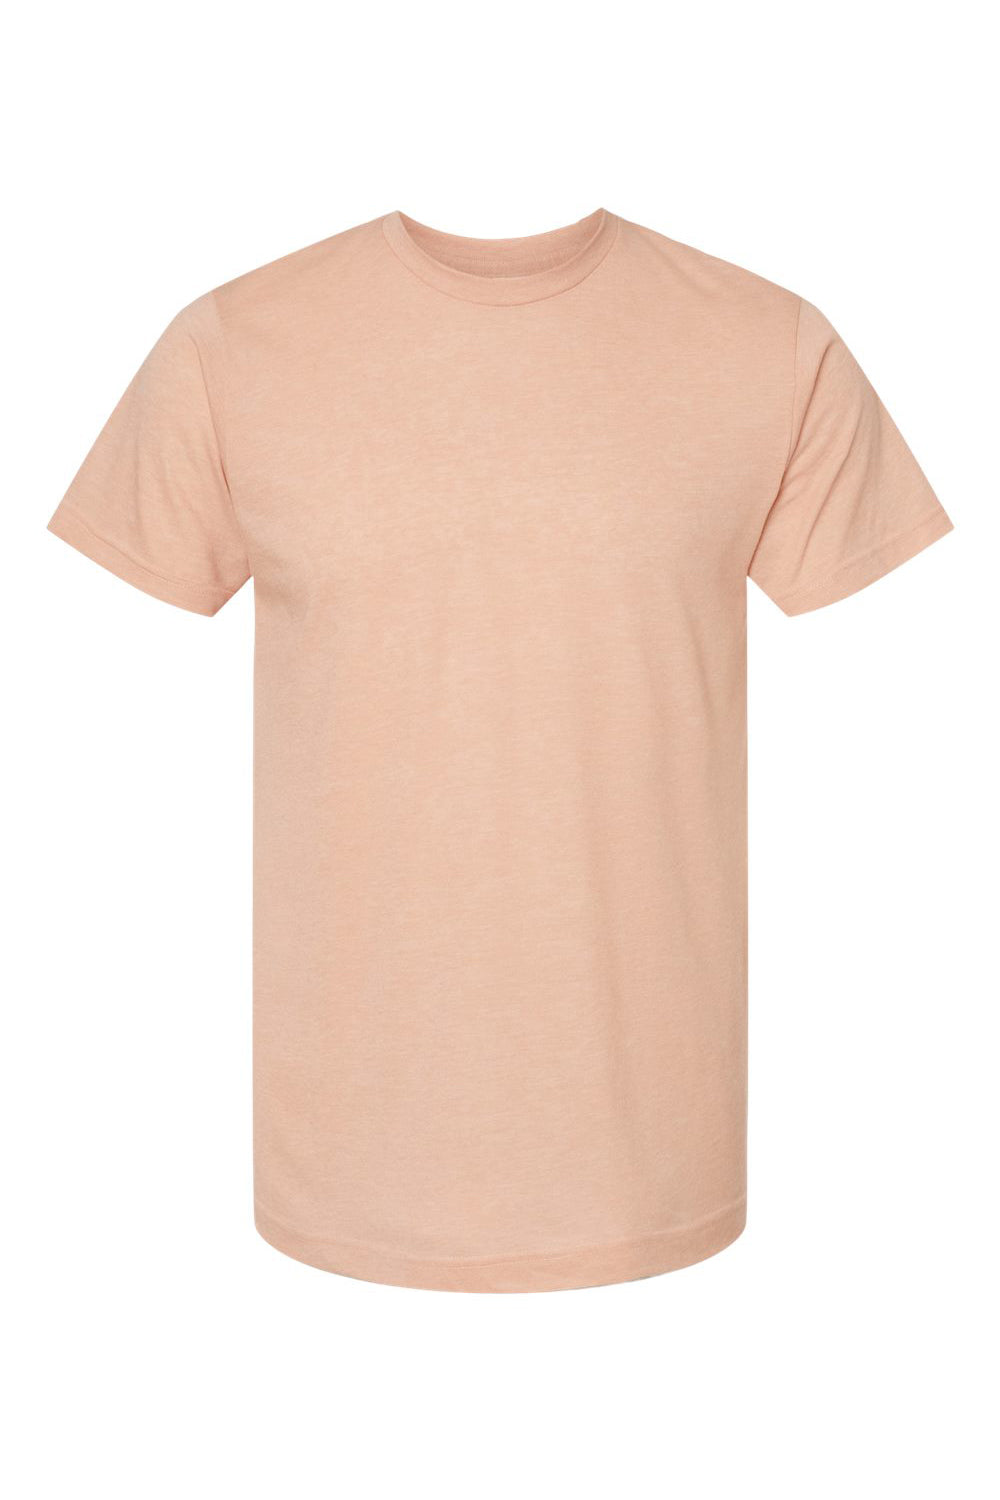 Tultex 241 Mens Poly-Rich Short Sleeve Crewneck T-Shirt Heather Peach Flat Front